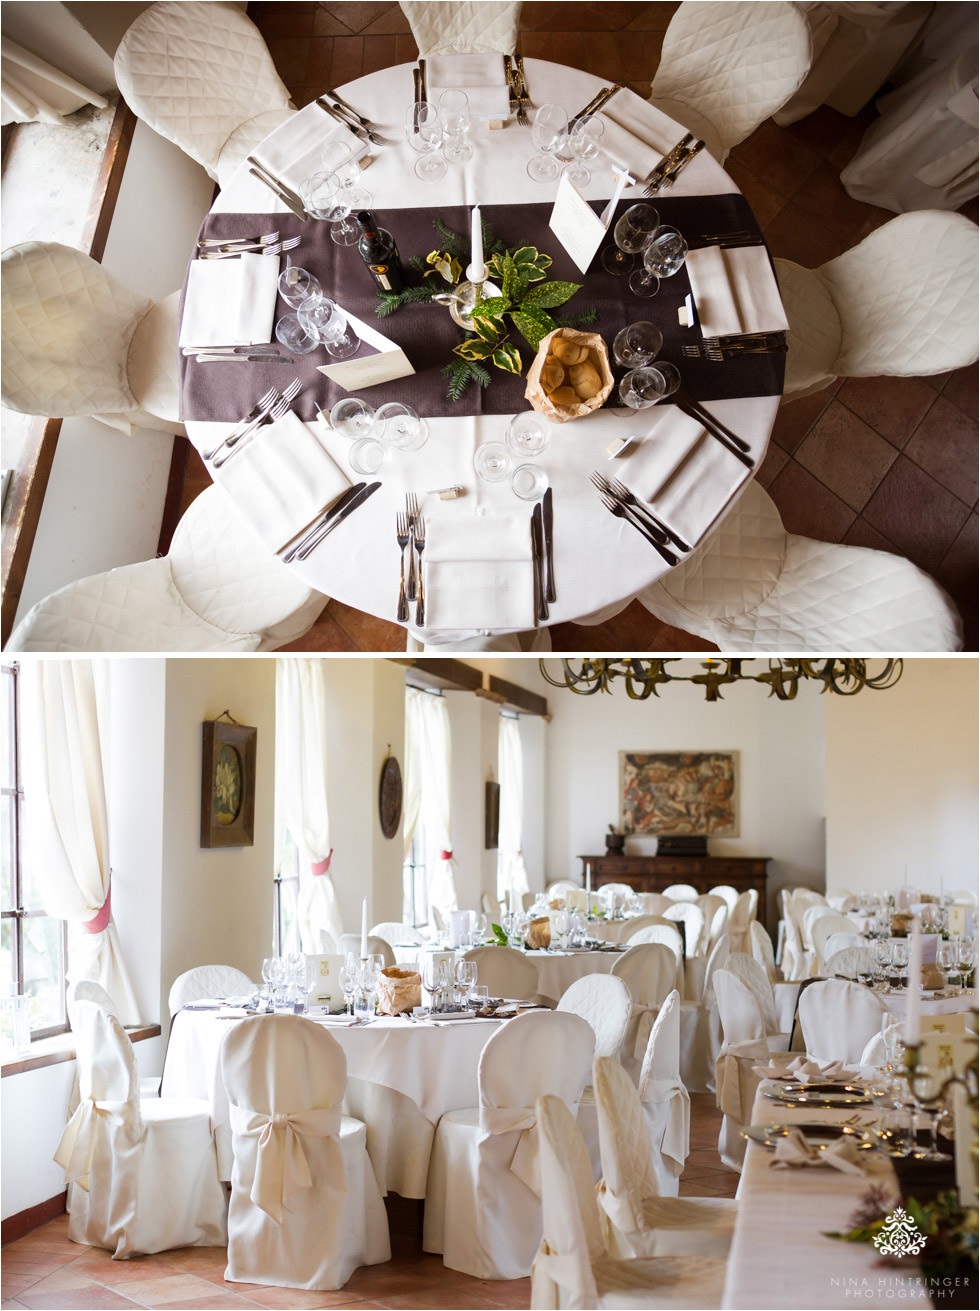 Detail shots of Villa Damiani in Bassano del Grappa, Italy - Blog of Nina Hintringer Photography - Wedding Photography, Wedding Reportage and Destination Weddings